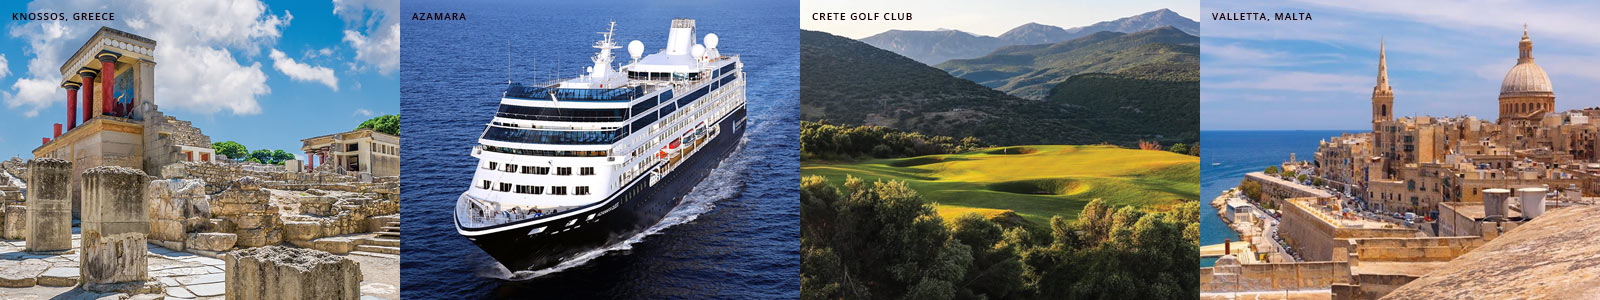 Golf Vacation Packages | Mediterranean Islands | Luxury Cruises | PerryGolf